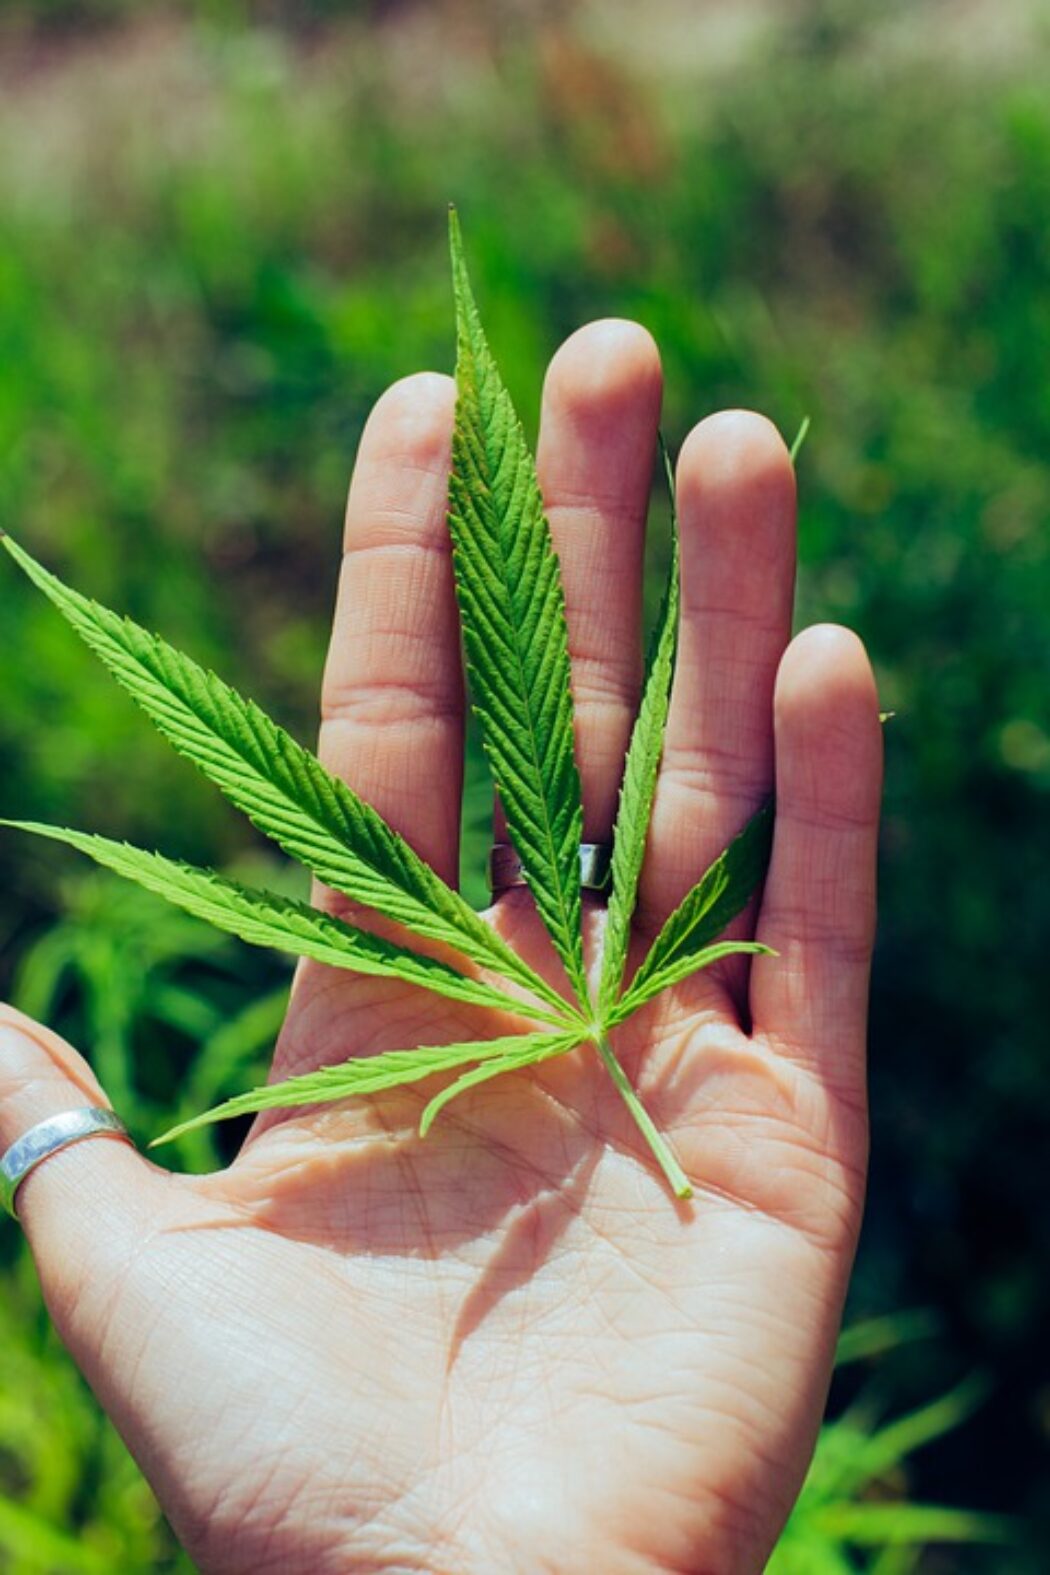 African County of Eswatini Introduces Medical Cannabis Legislation